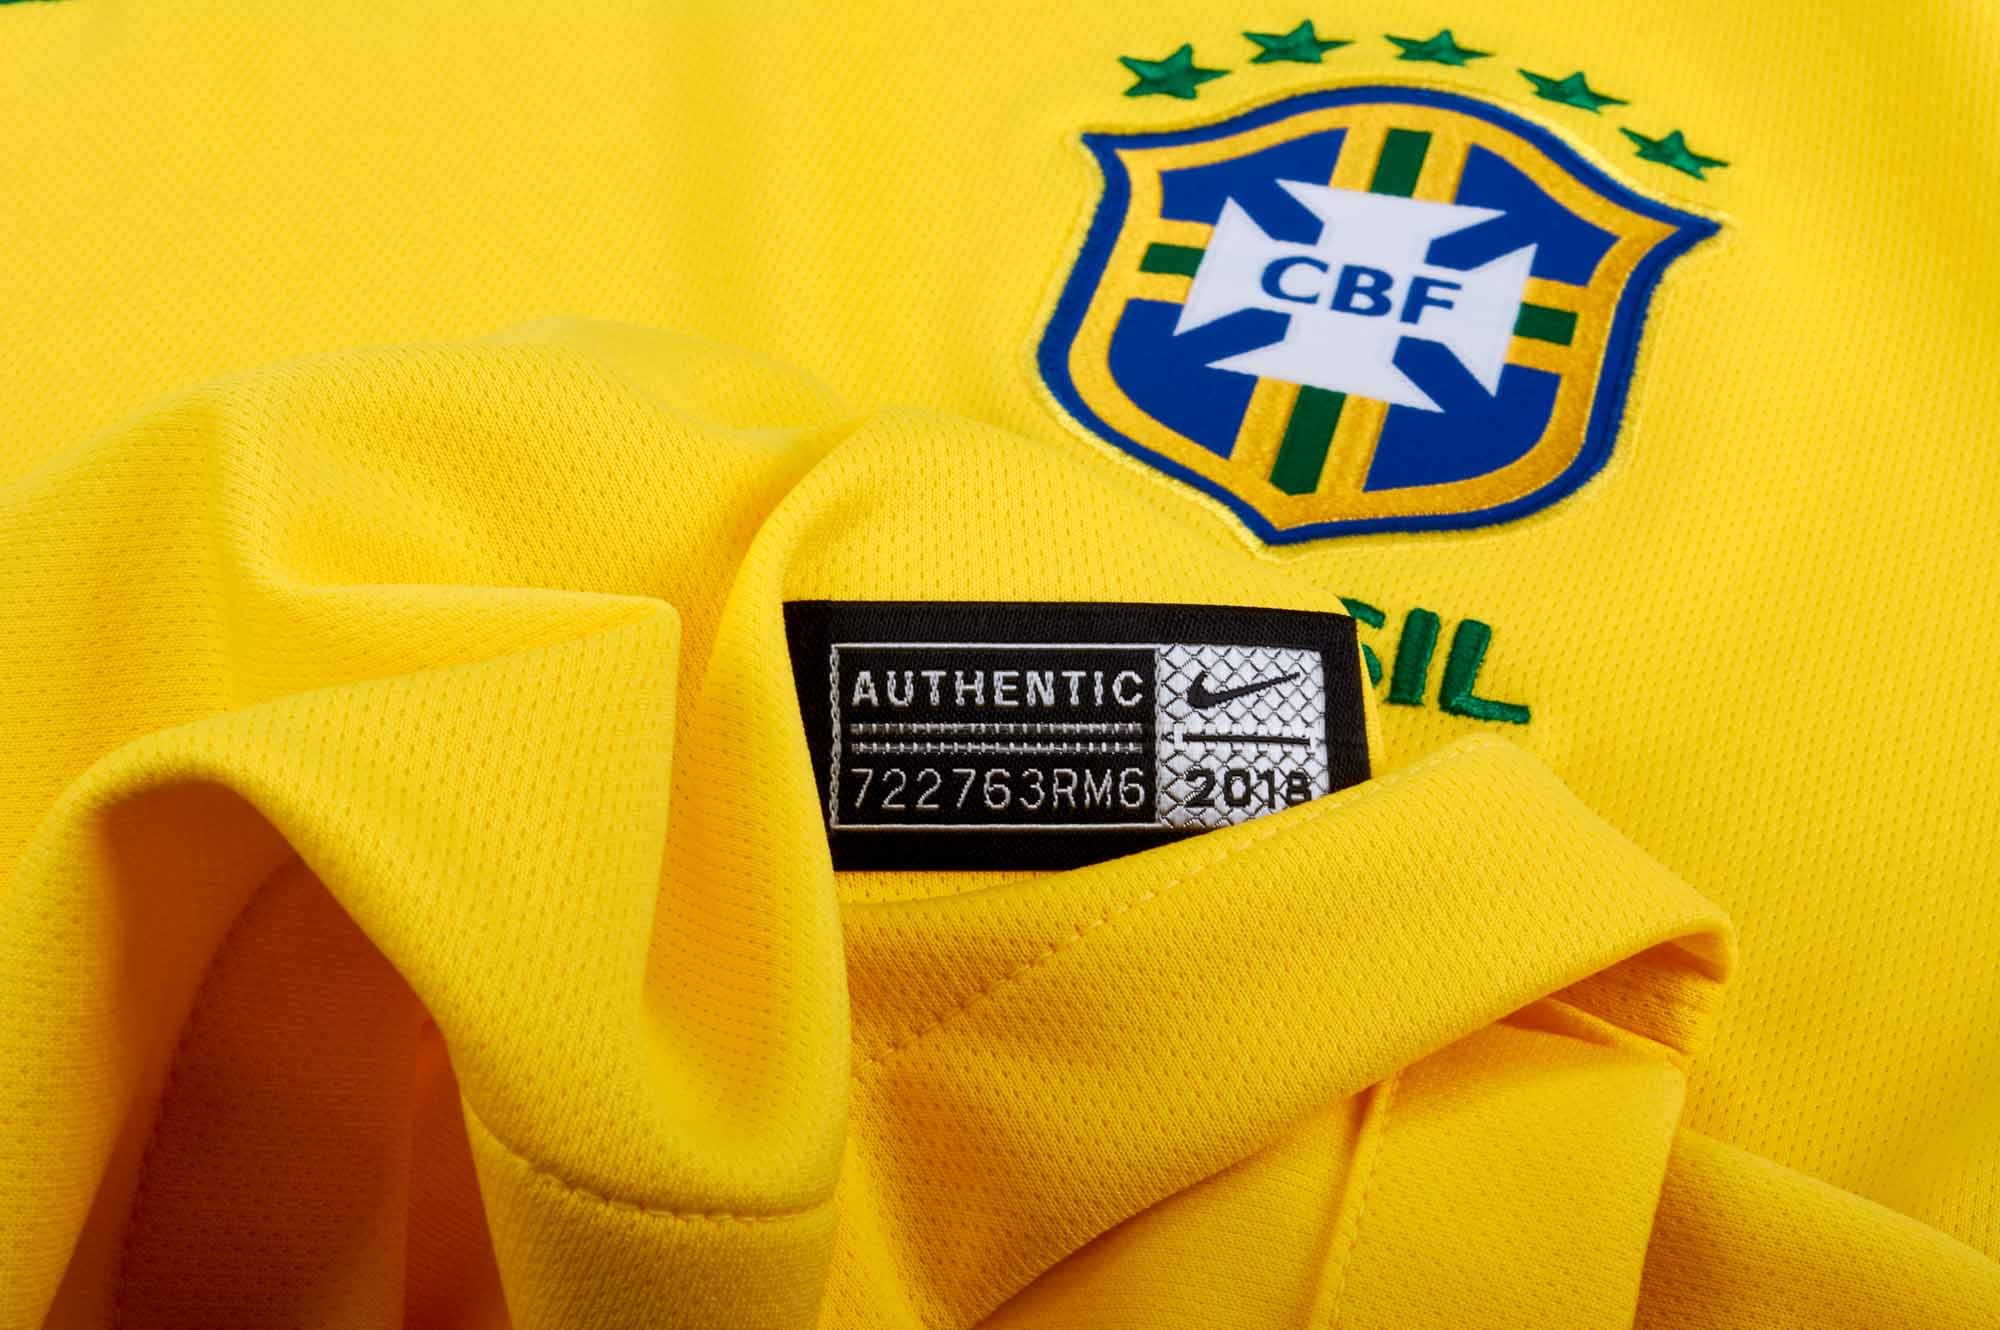 Brazil 2018 World Cup Training Shirt (BNWT) S